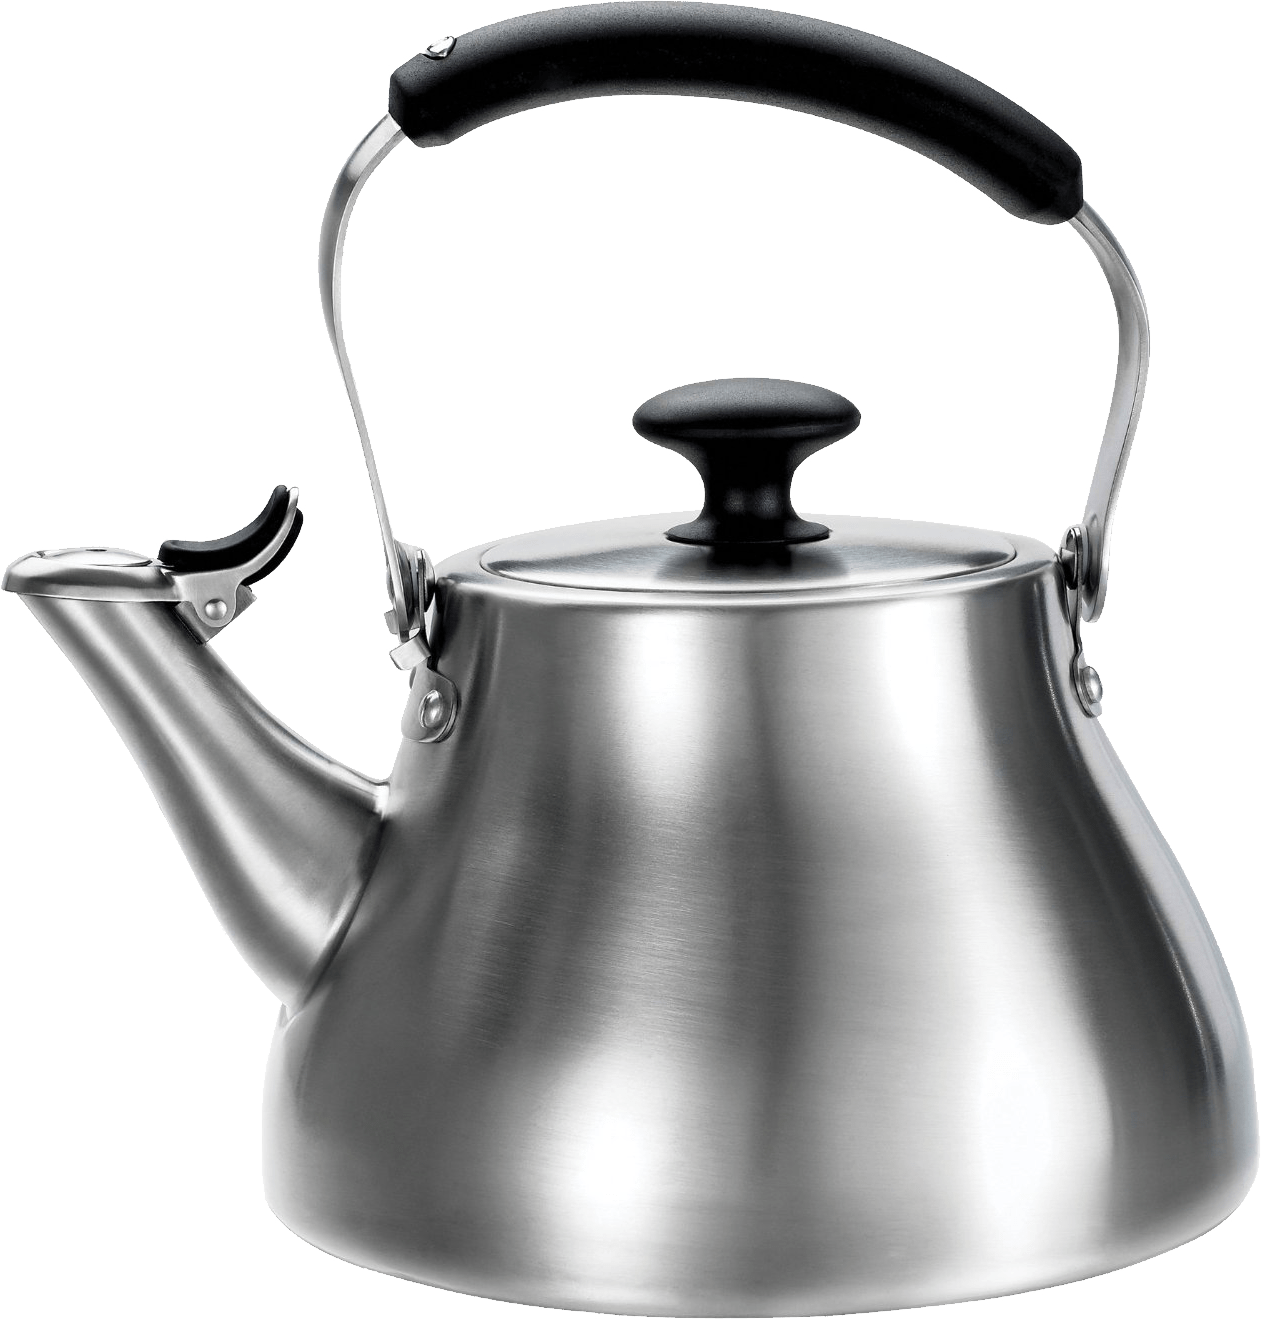 Картинка чайник прозрачный фон. Чайник oxo kettle. Stainless Steel чайники. Tea kettle Stainless Steel. Чайник без фона.